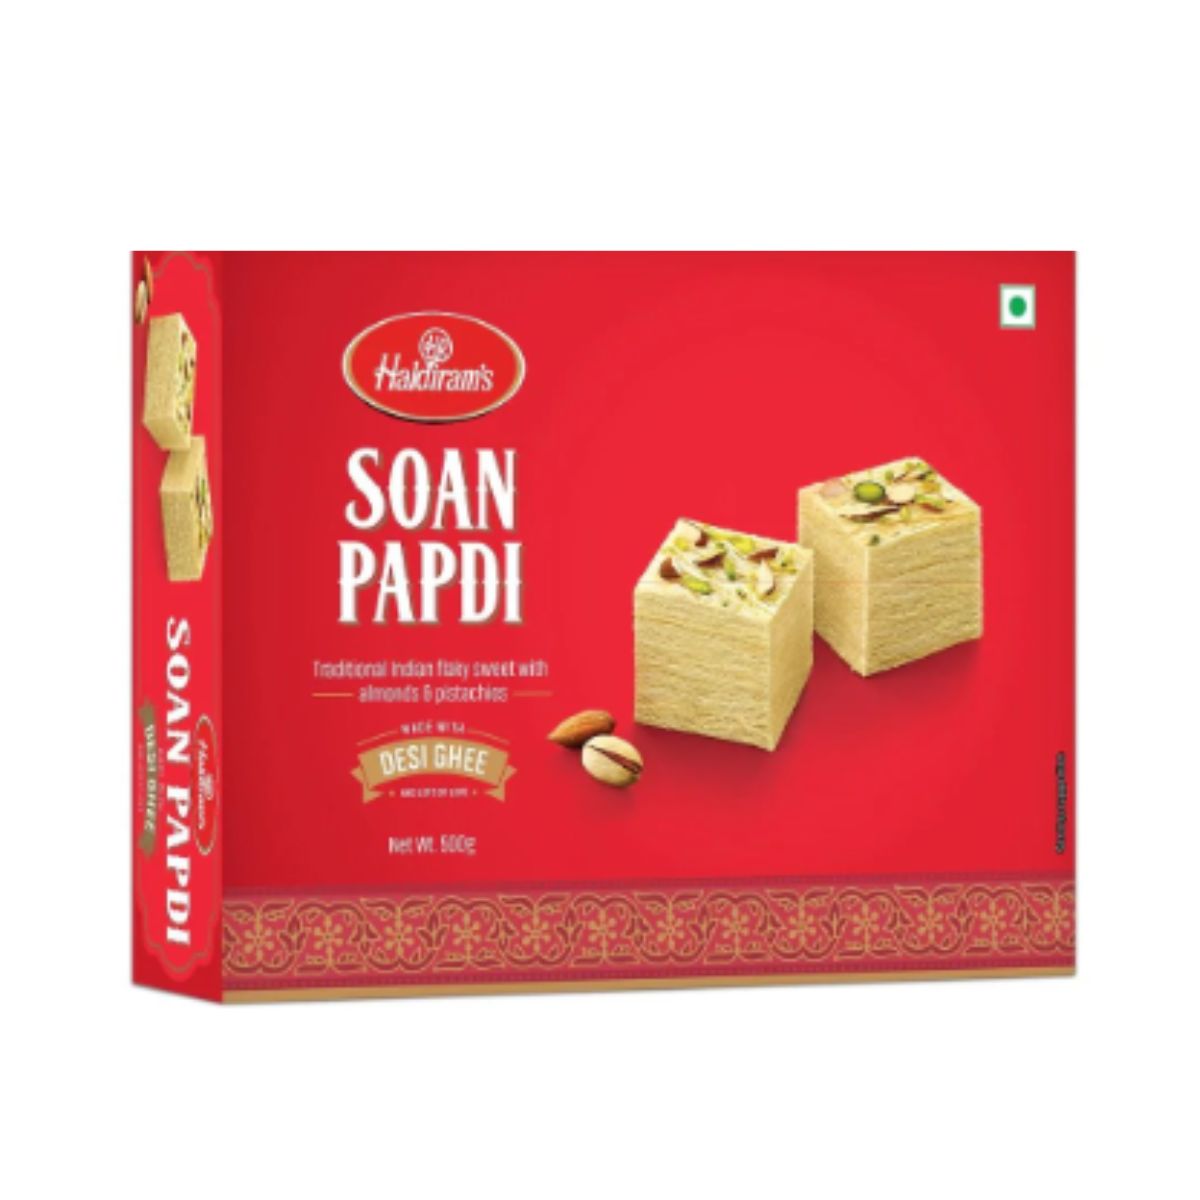 Haldiram's Soan Papdi - Traditional Indian Flaky Sweet With Almonds & Pistachios - 500g